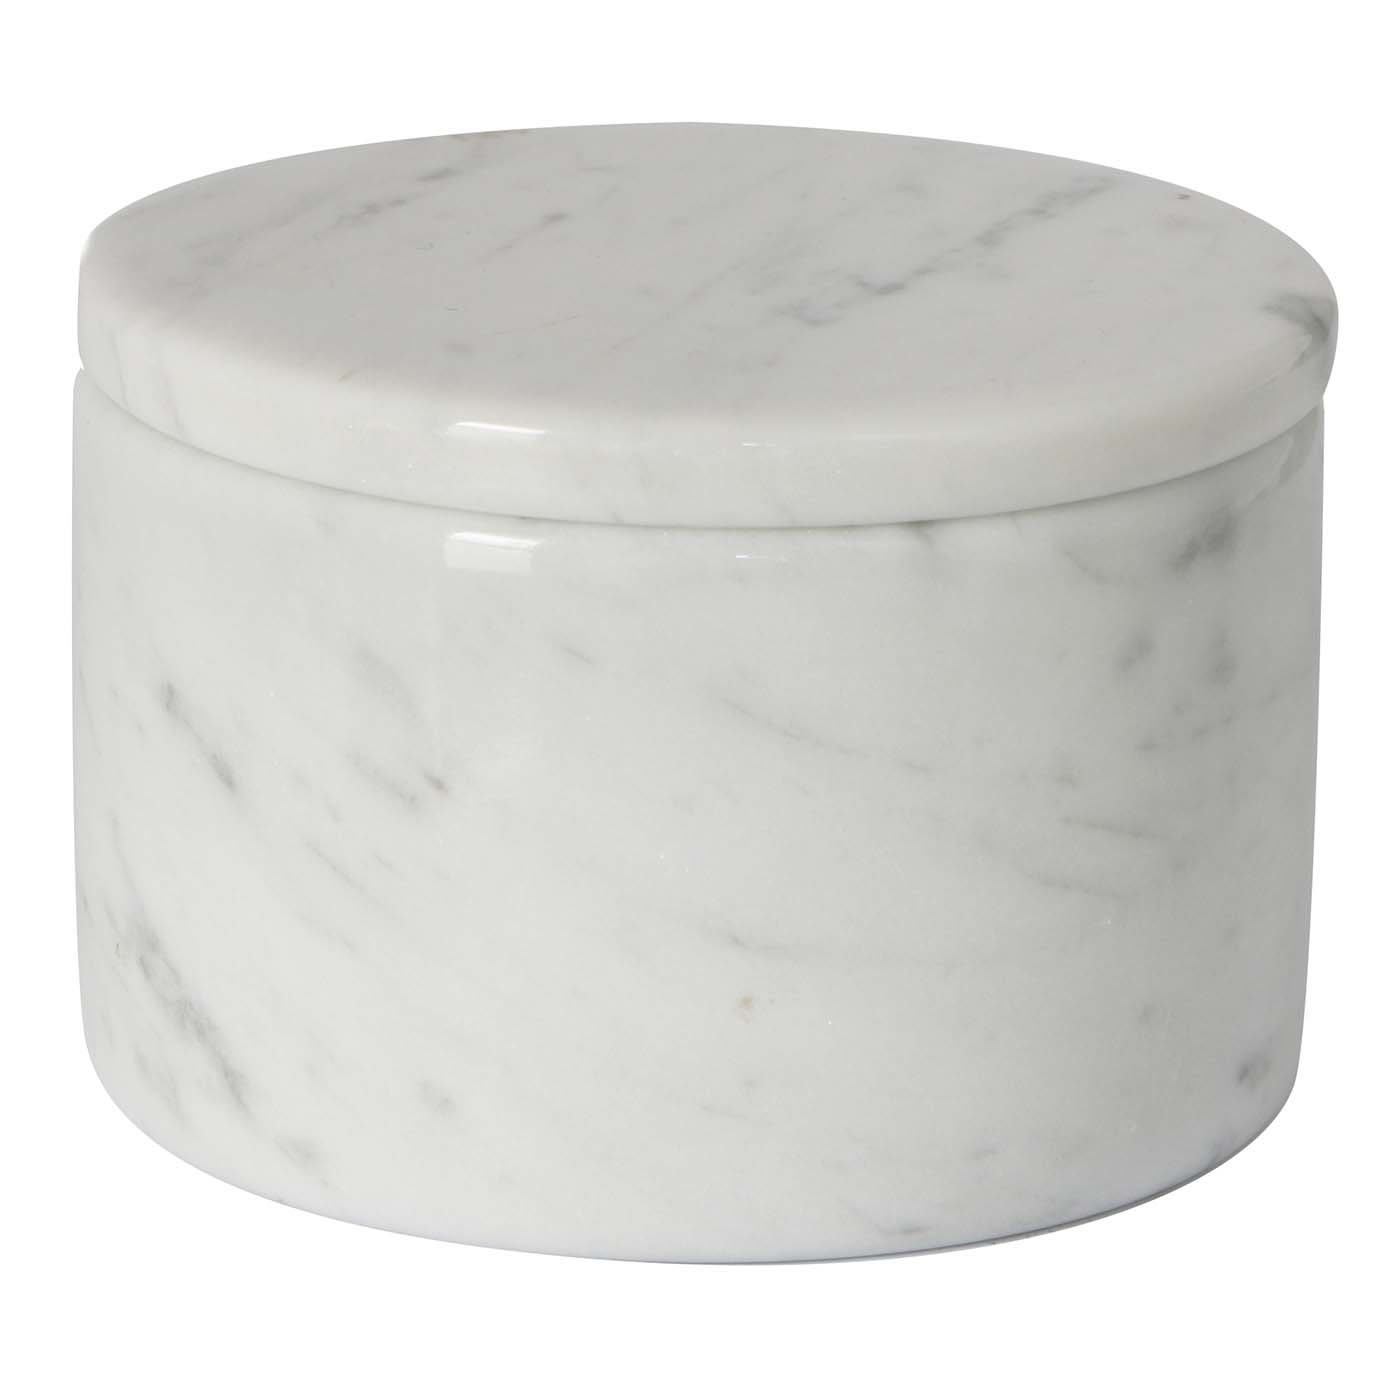 Box with Lid in White Carrara Marble - Carrara Home Design